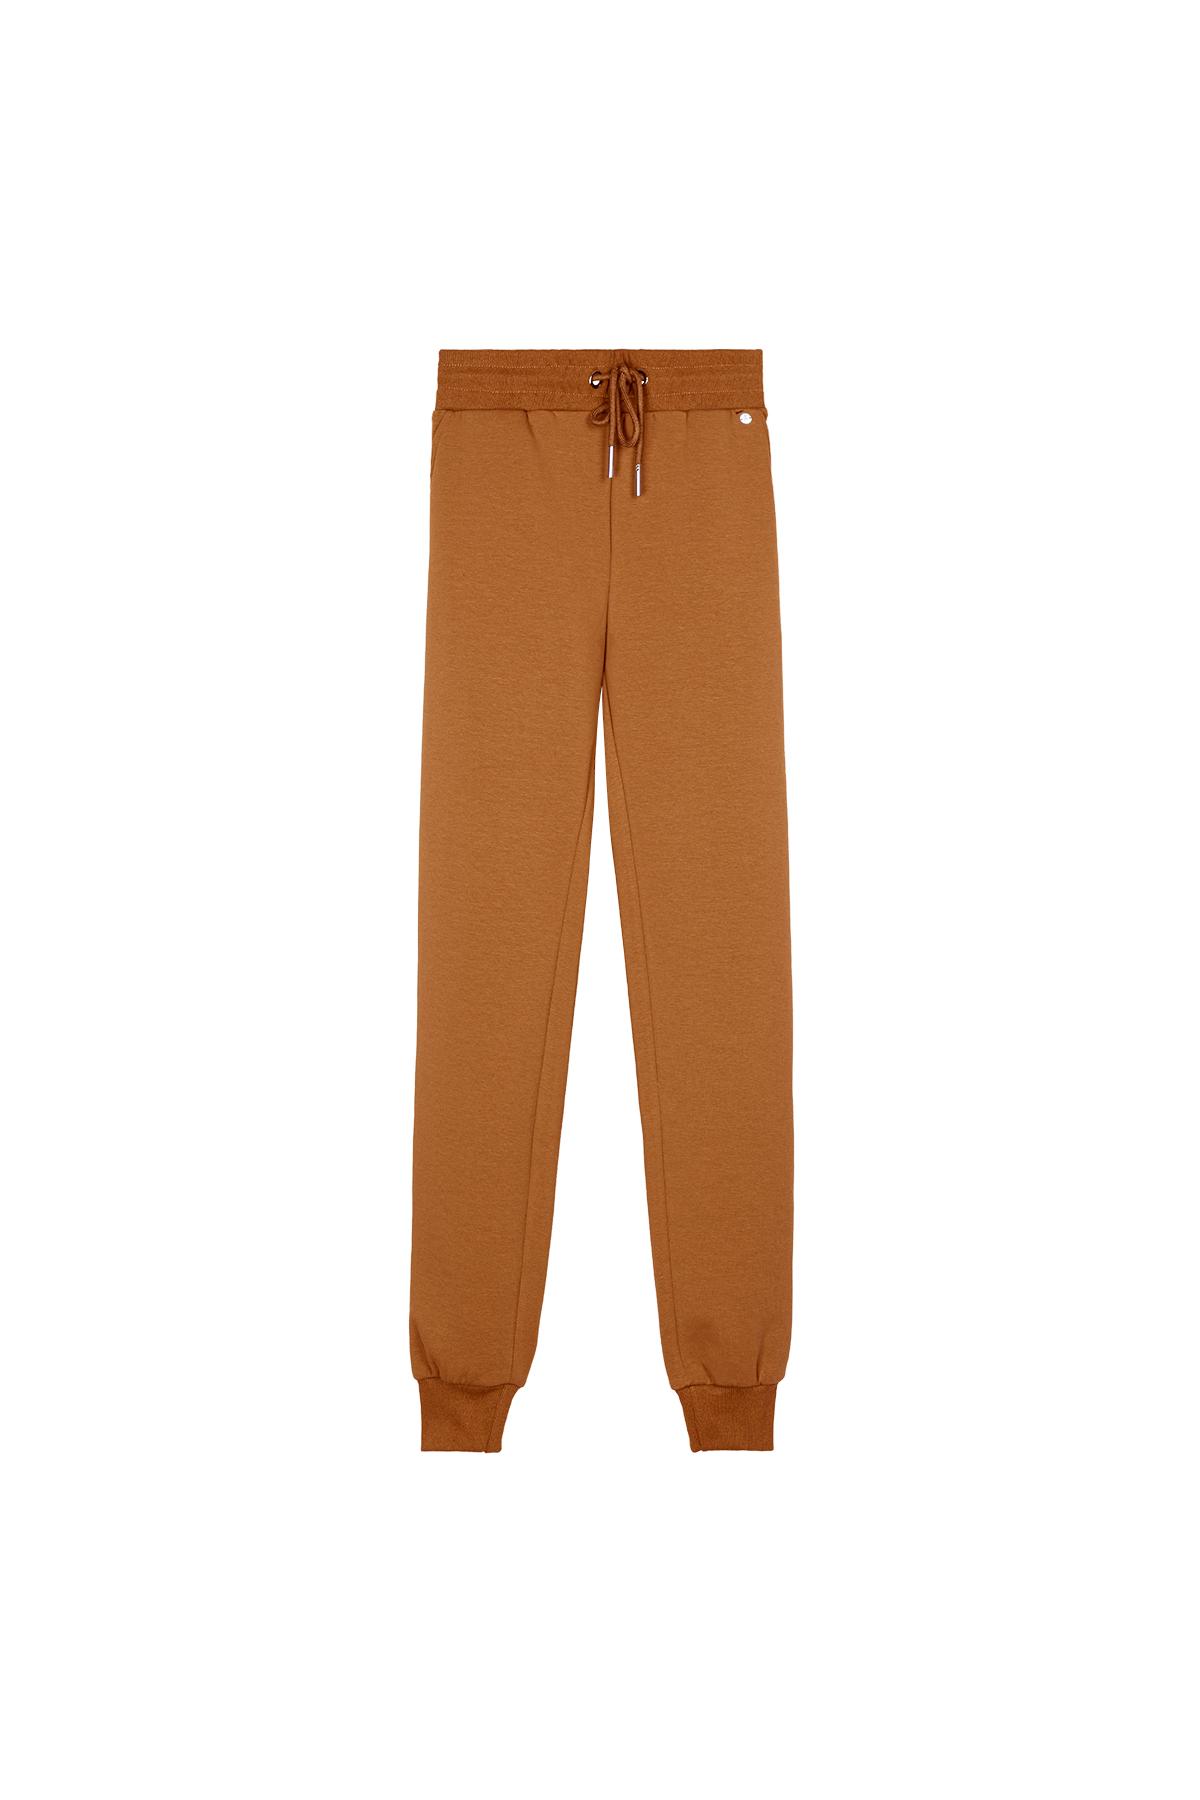 Comy pantalon loungewear Orange M 